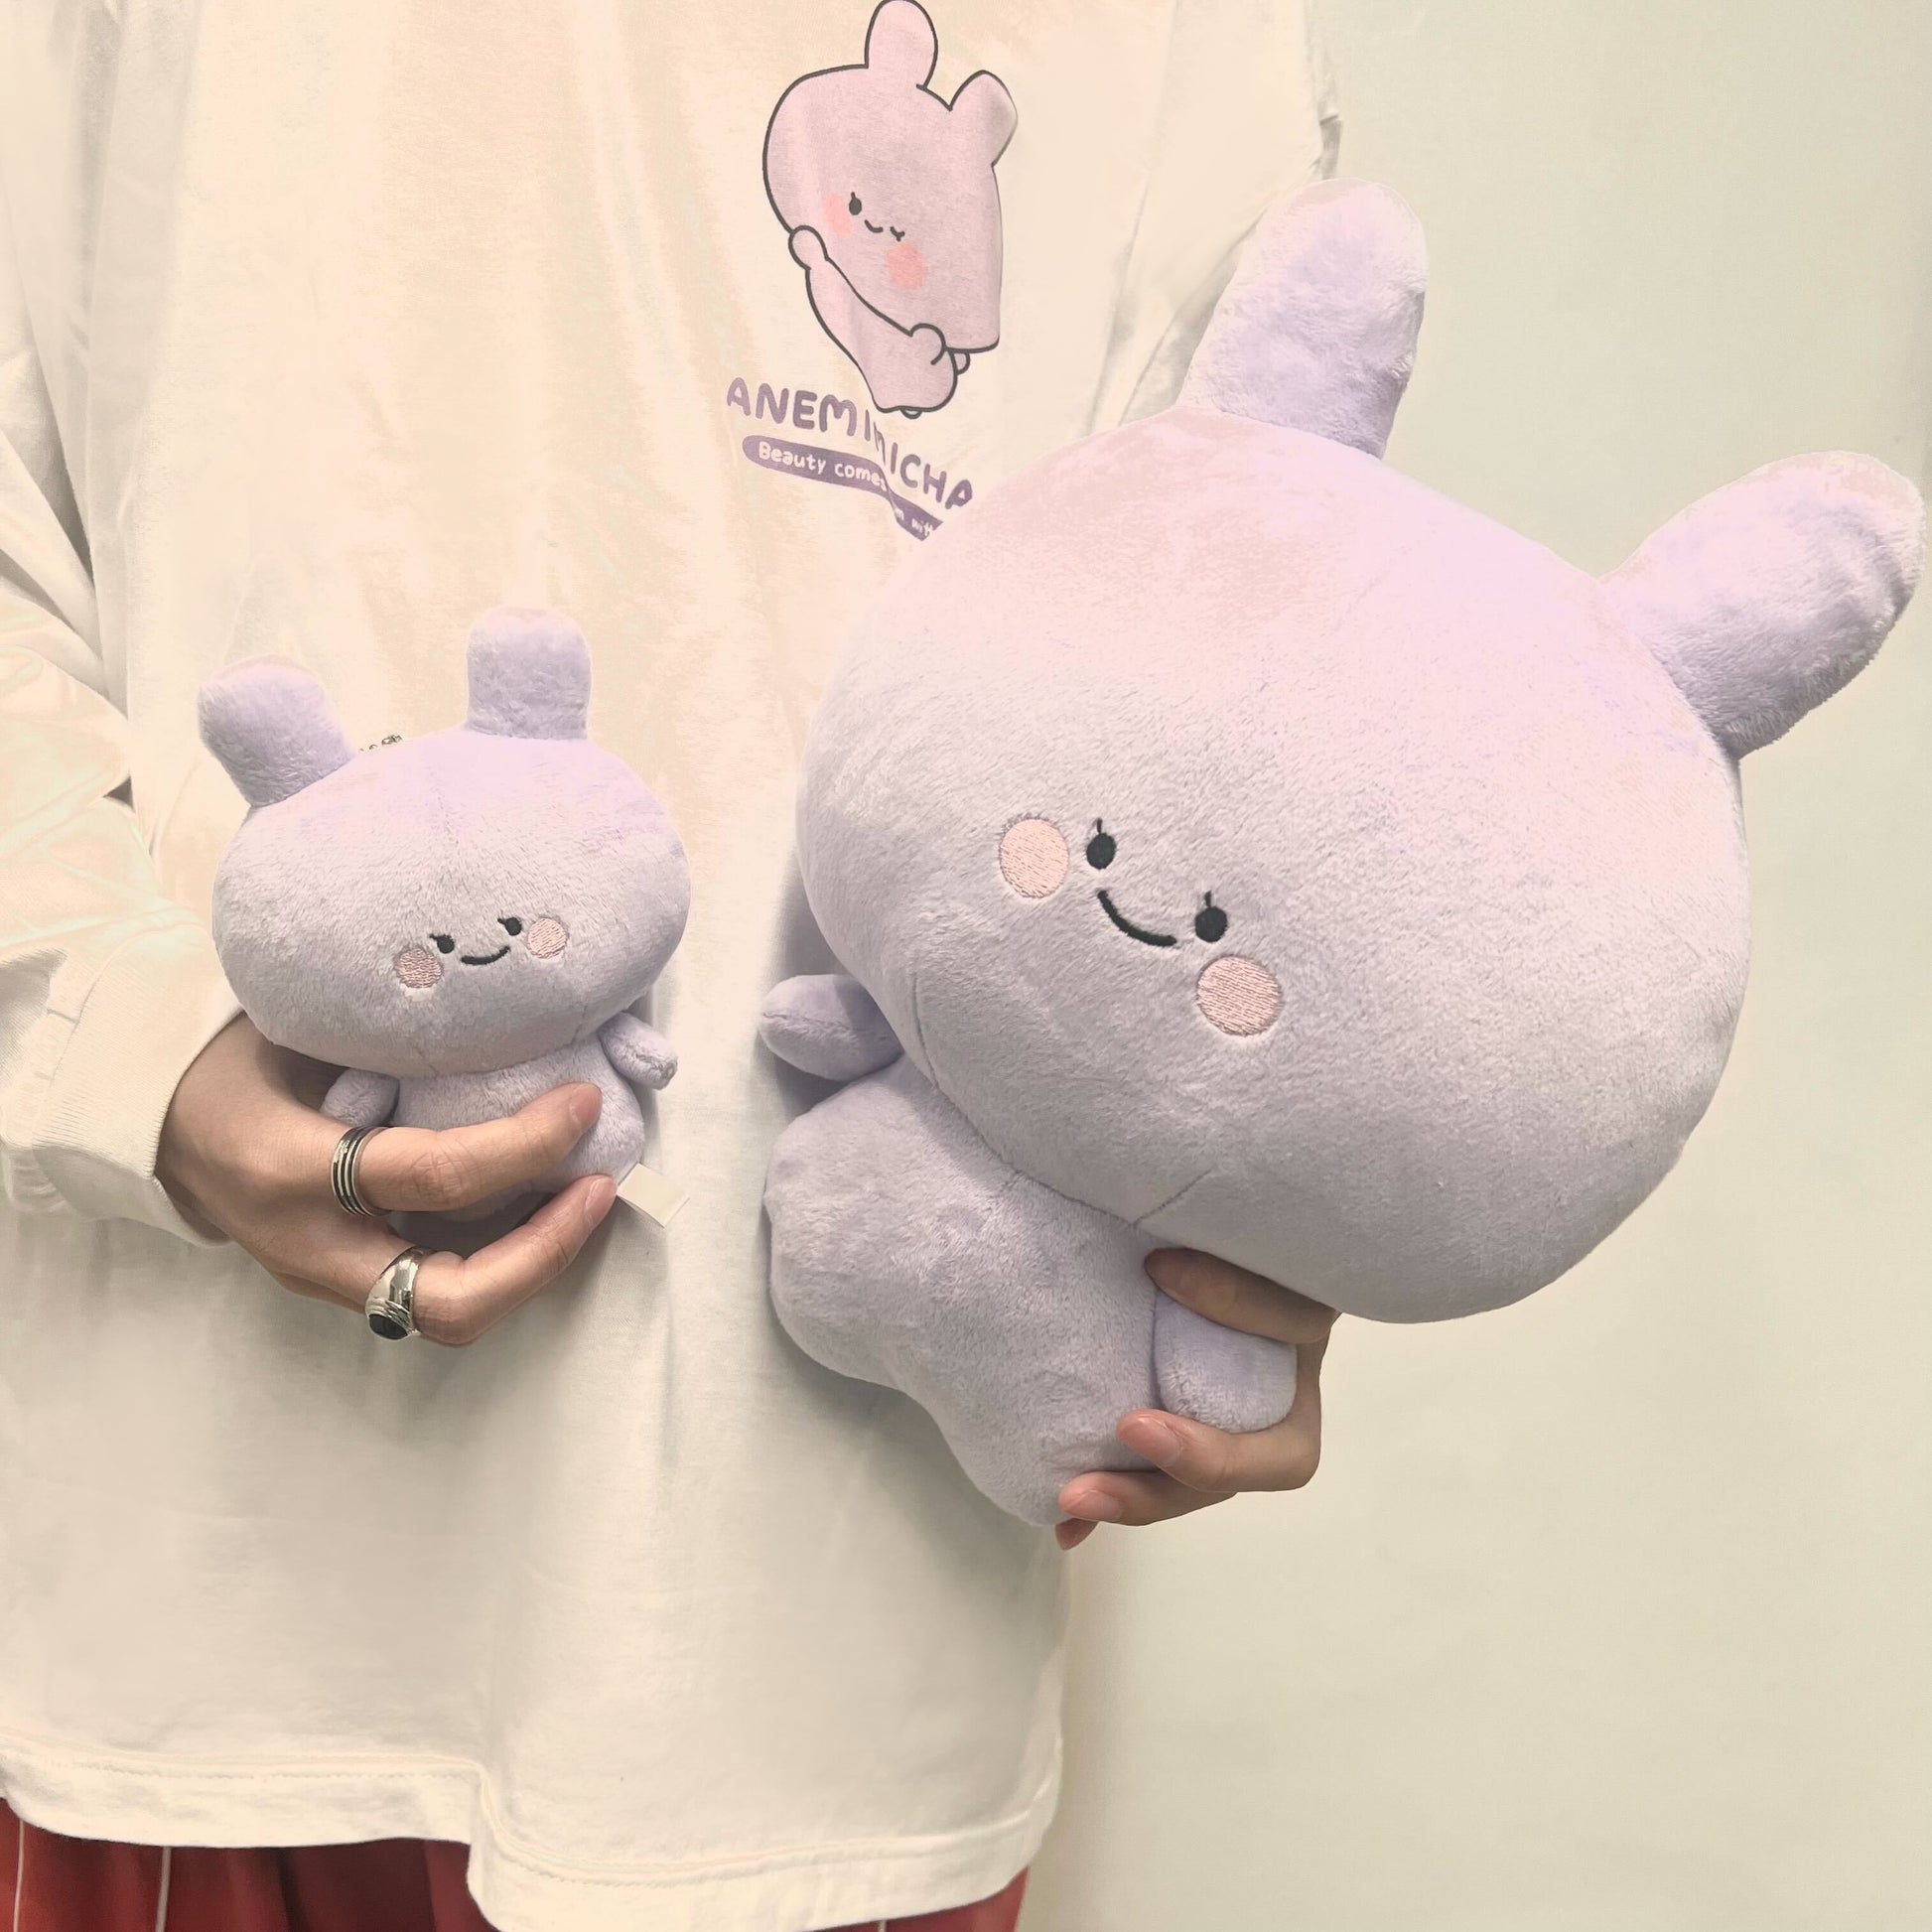 ANEMIMI-chan] ANEMIMI-chan stuffed animal 30cm (ANEMIMI HAPPY